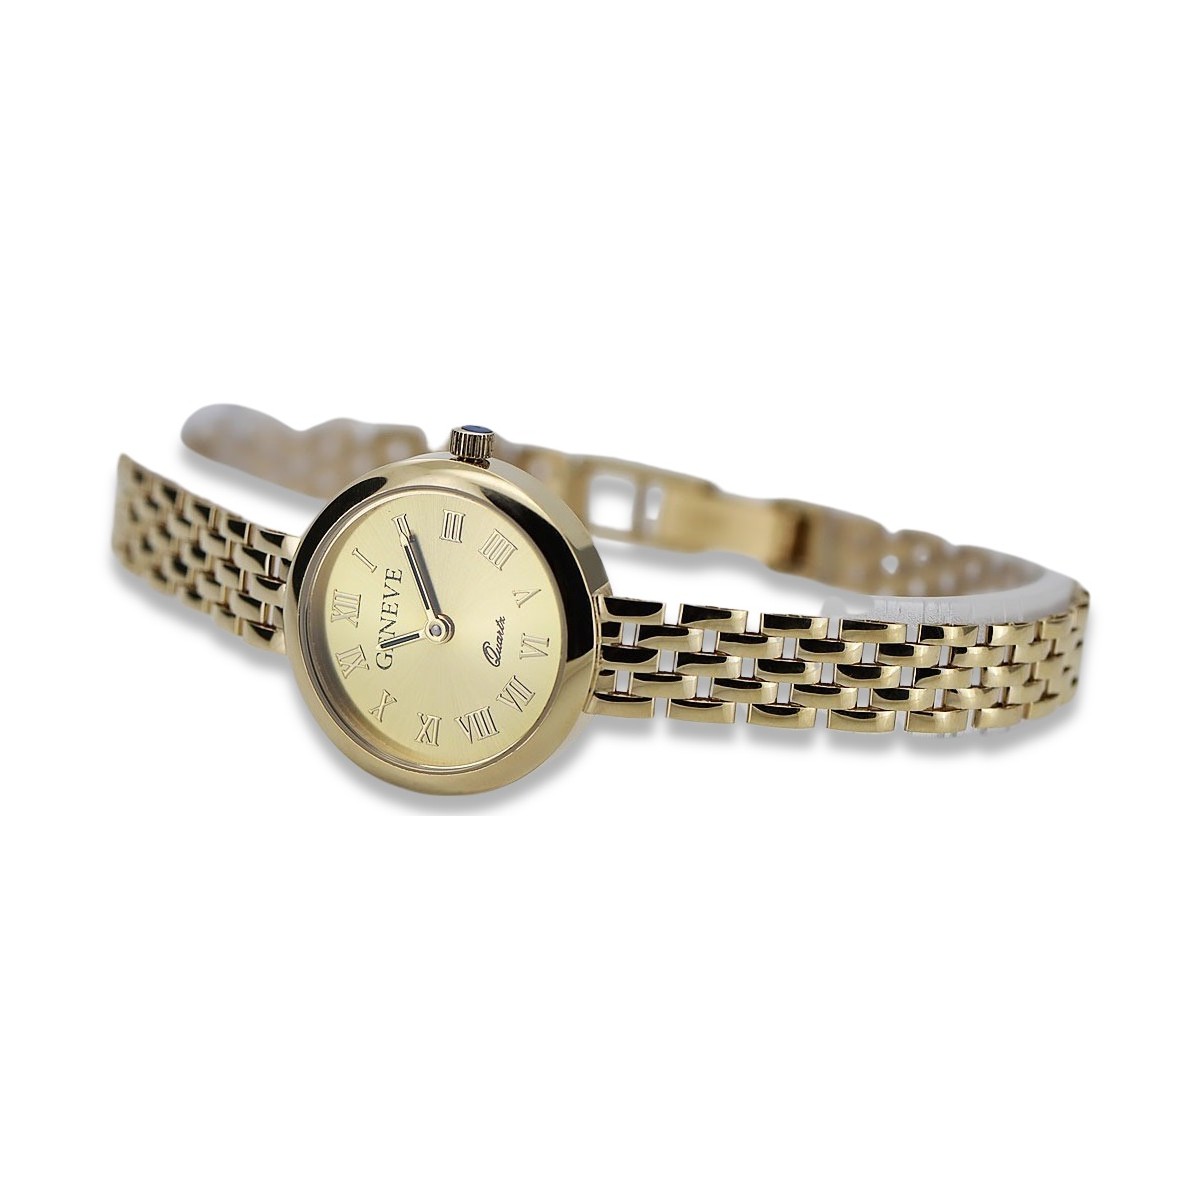 красивого жіночого годинника Geneve lw048y з 14-каратного золота